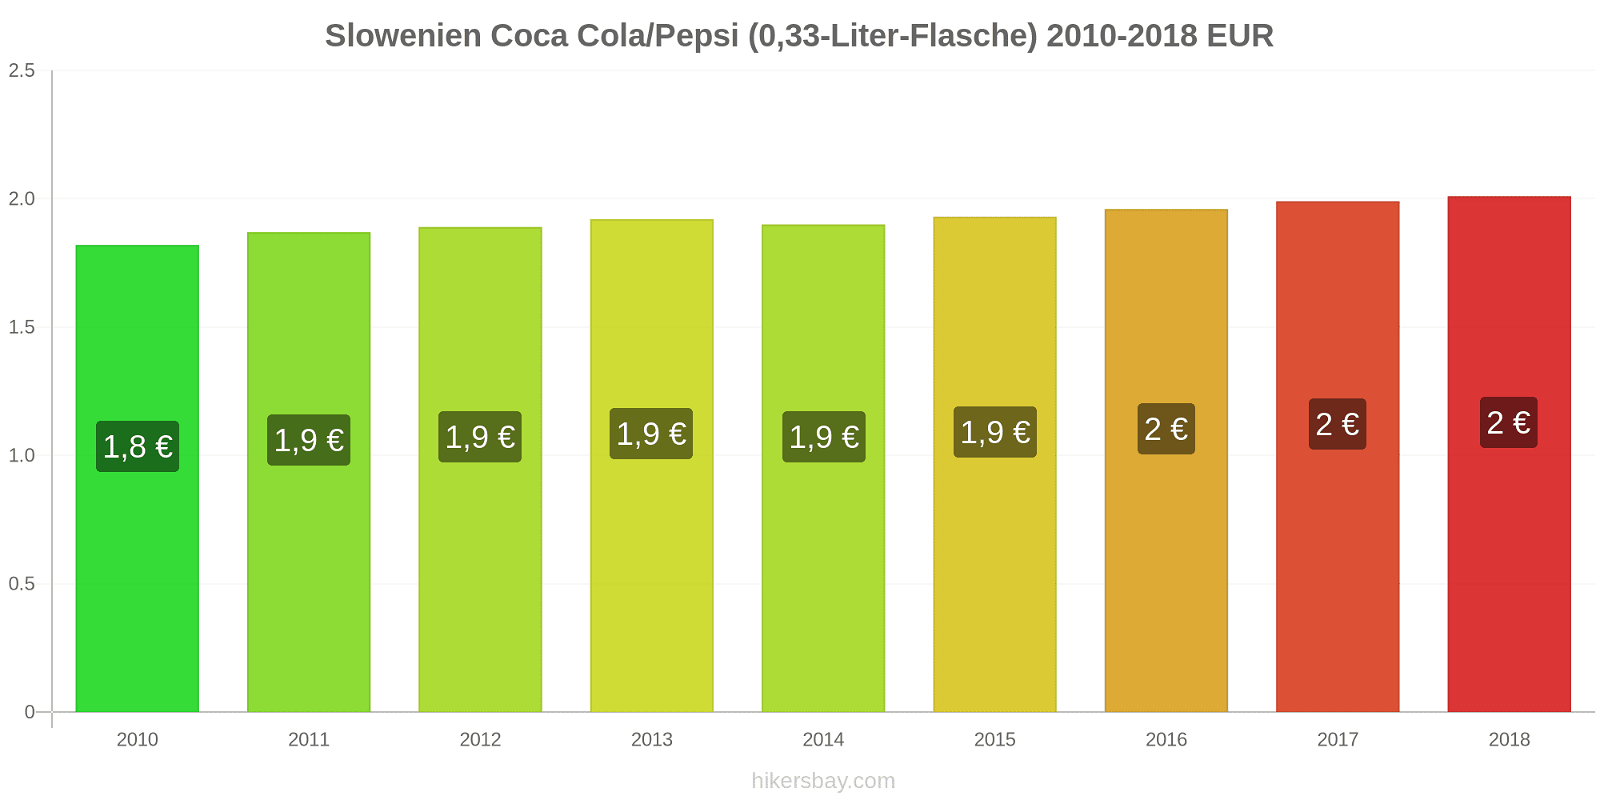 Slowenien Preisänderungen Coke/Pepsi (0,33-Liter-Flasche) hikersbay.com